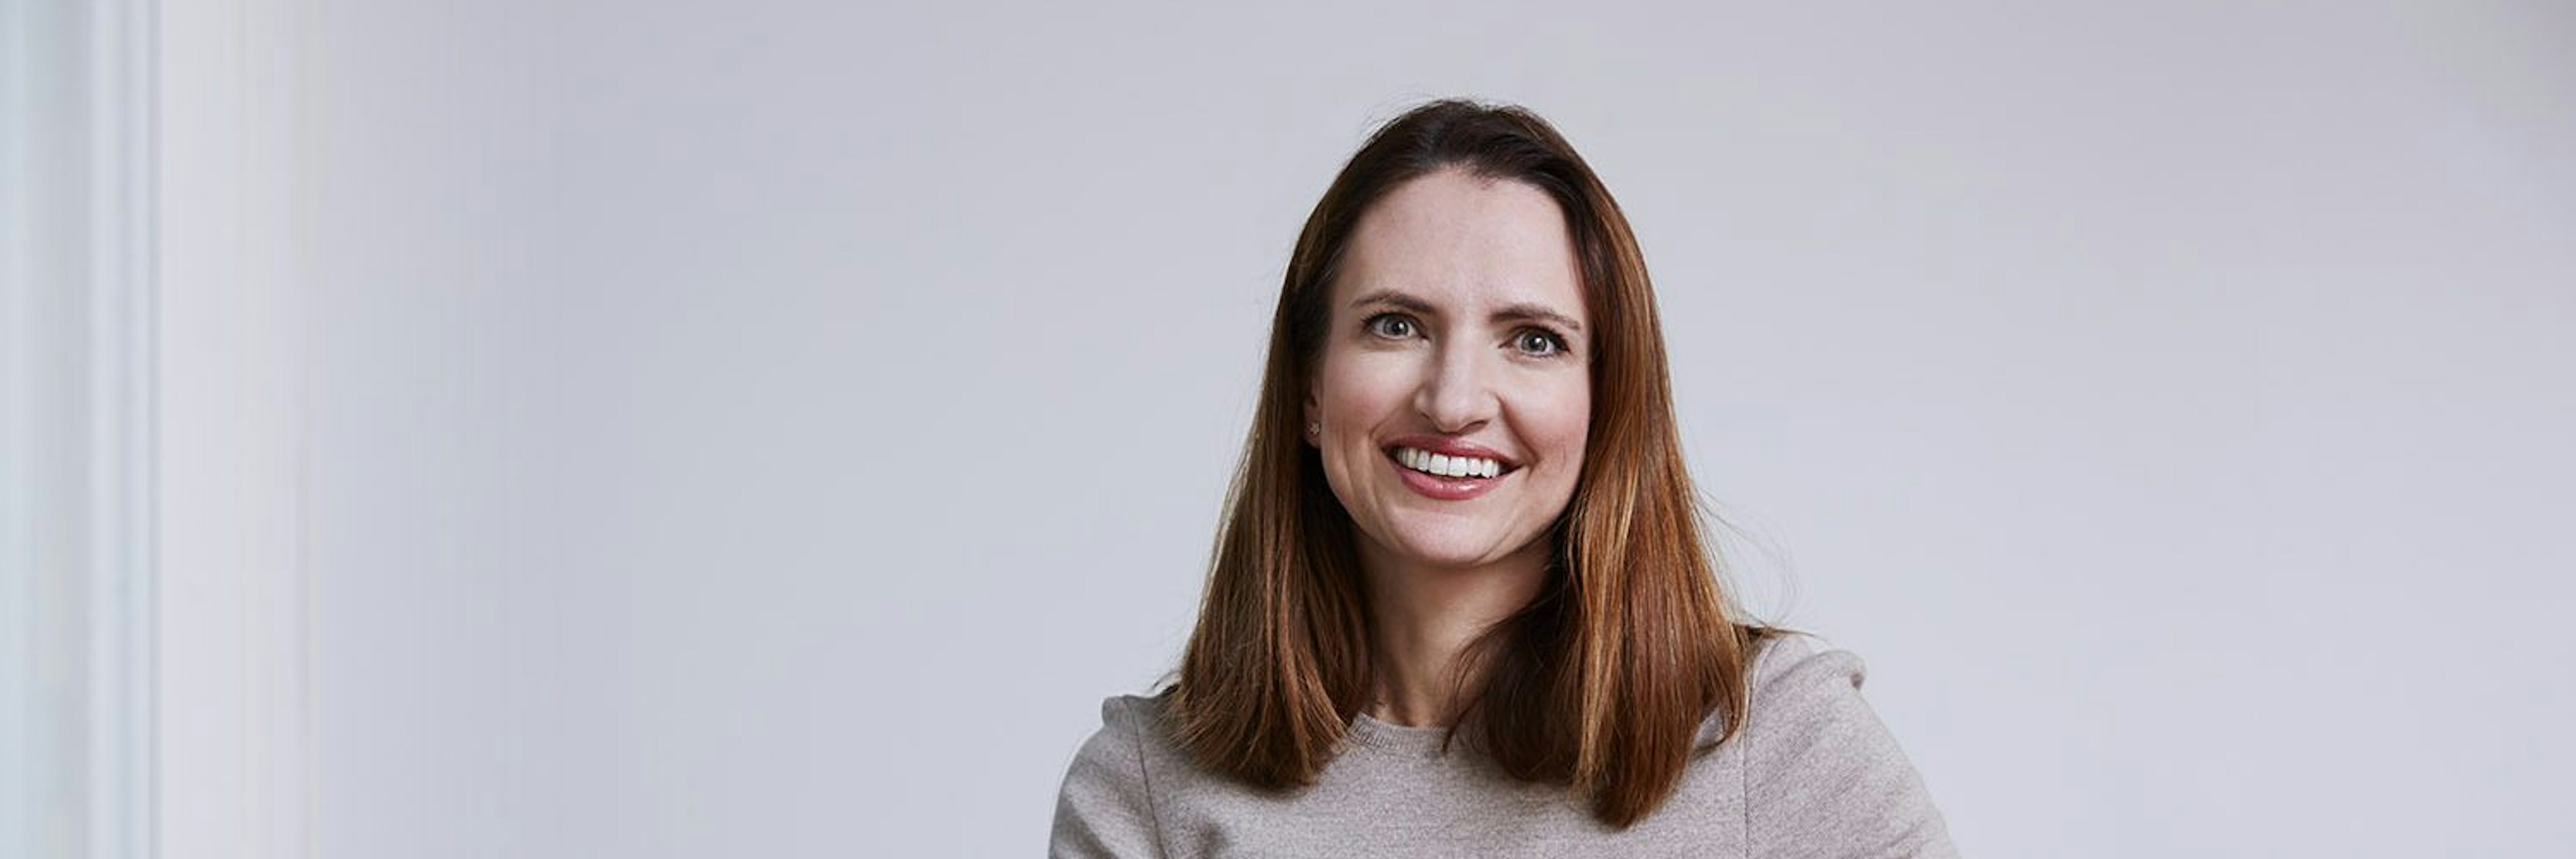 Portrait of Merete Hverven, CEO of Visma